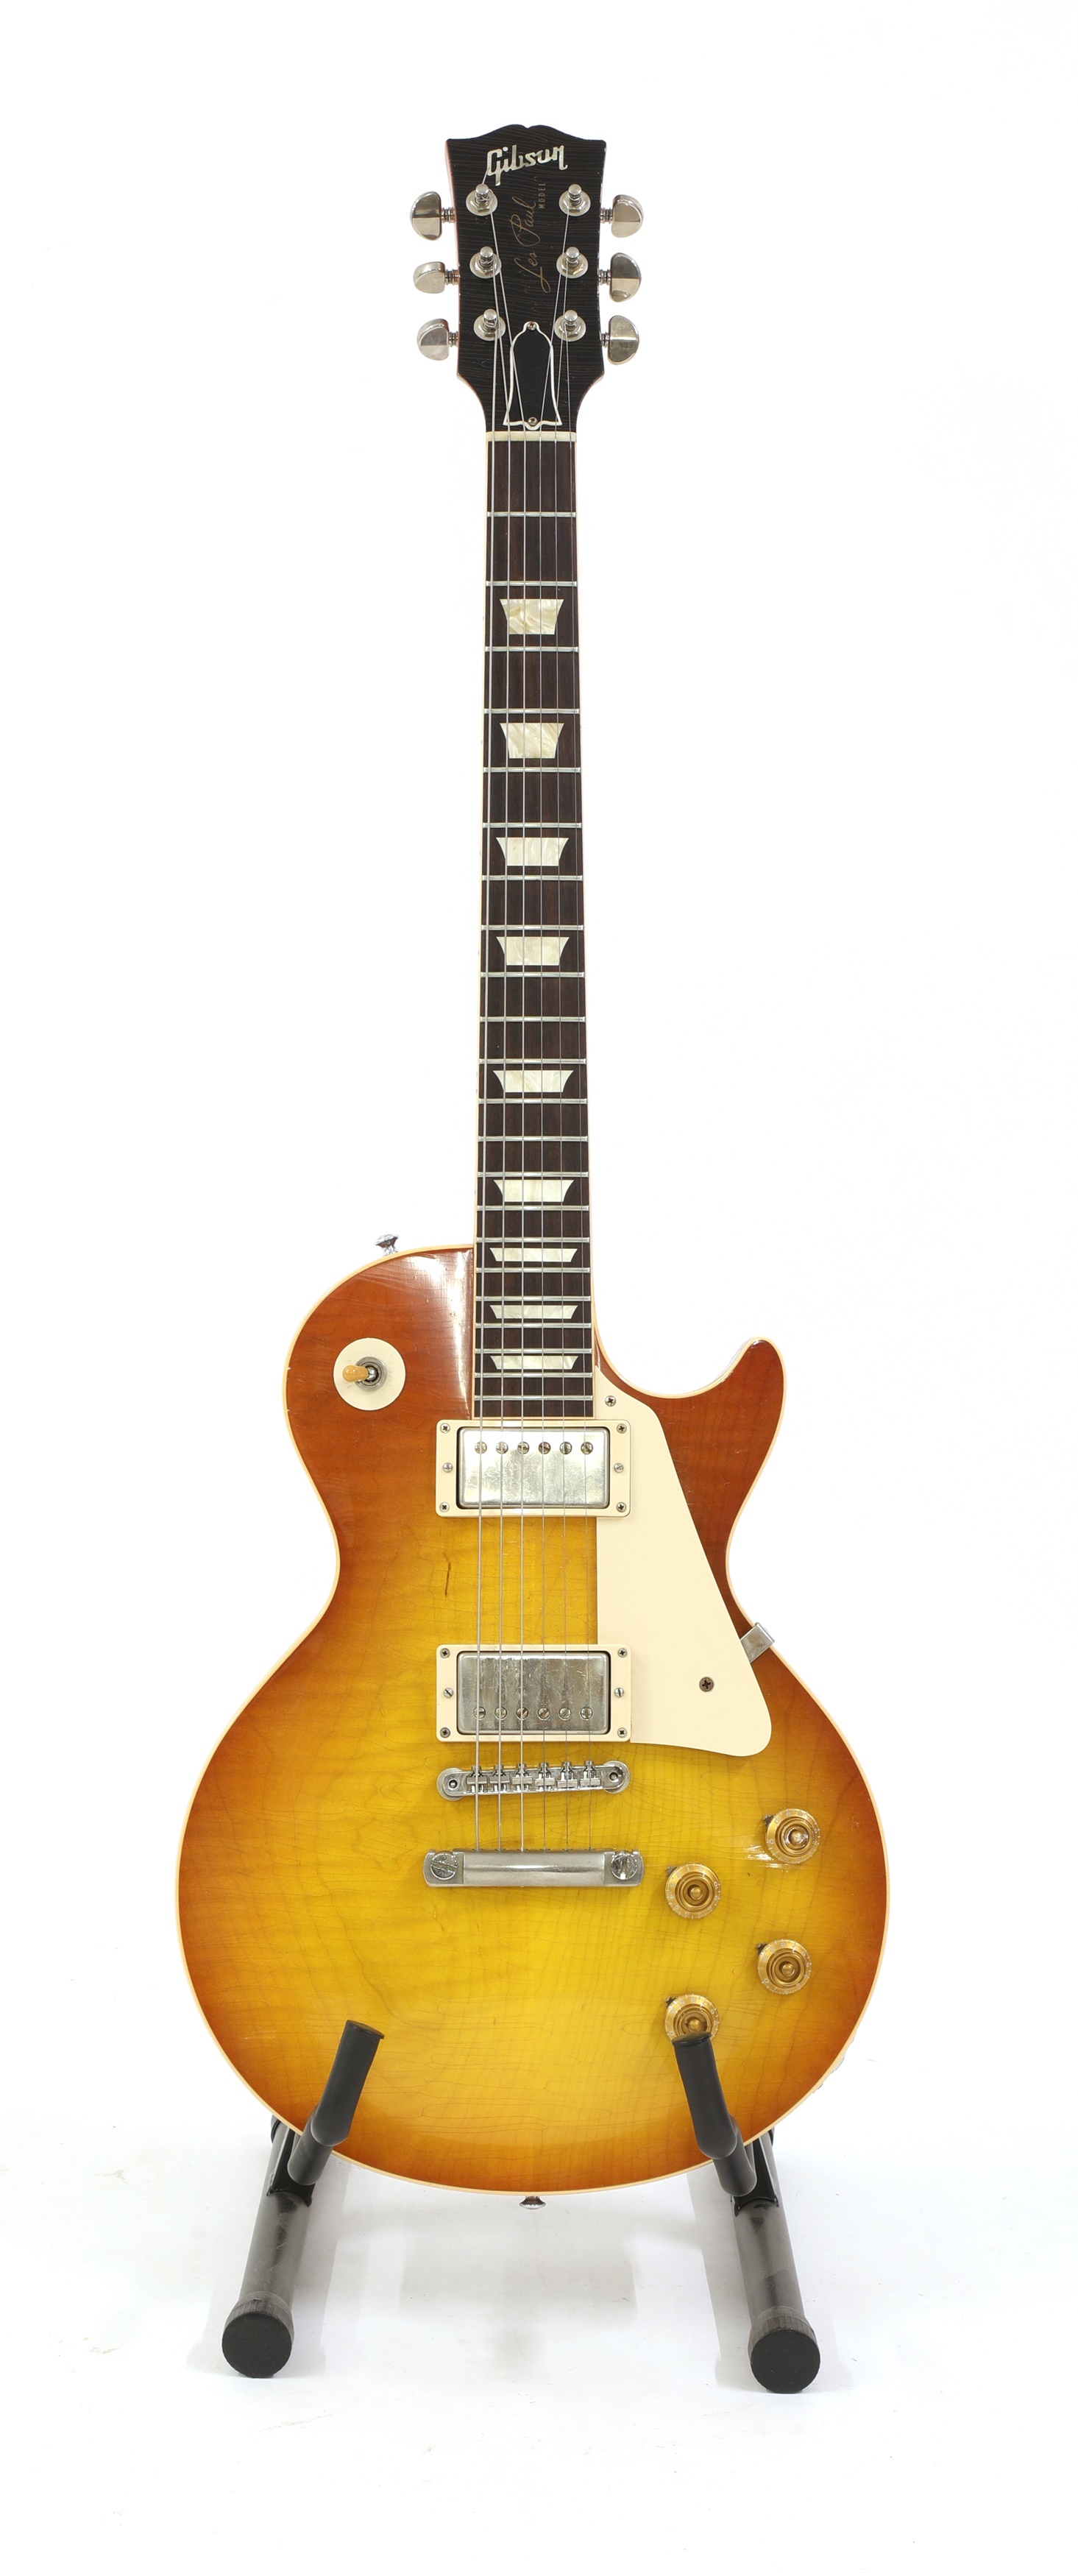 A 2010 Gibson Custom Shop Eric Clapton 'Beano' Les Paul electric guitar